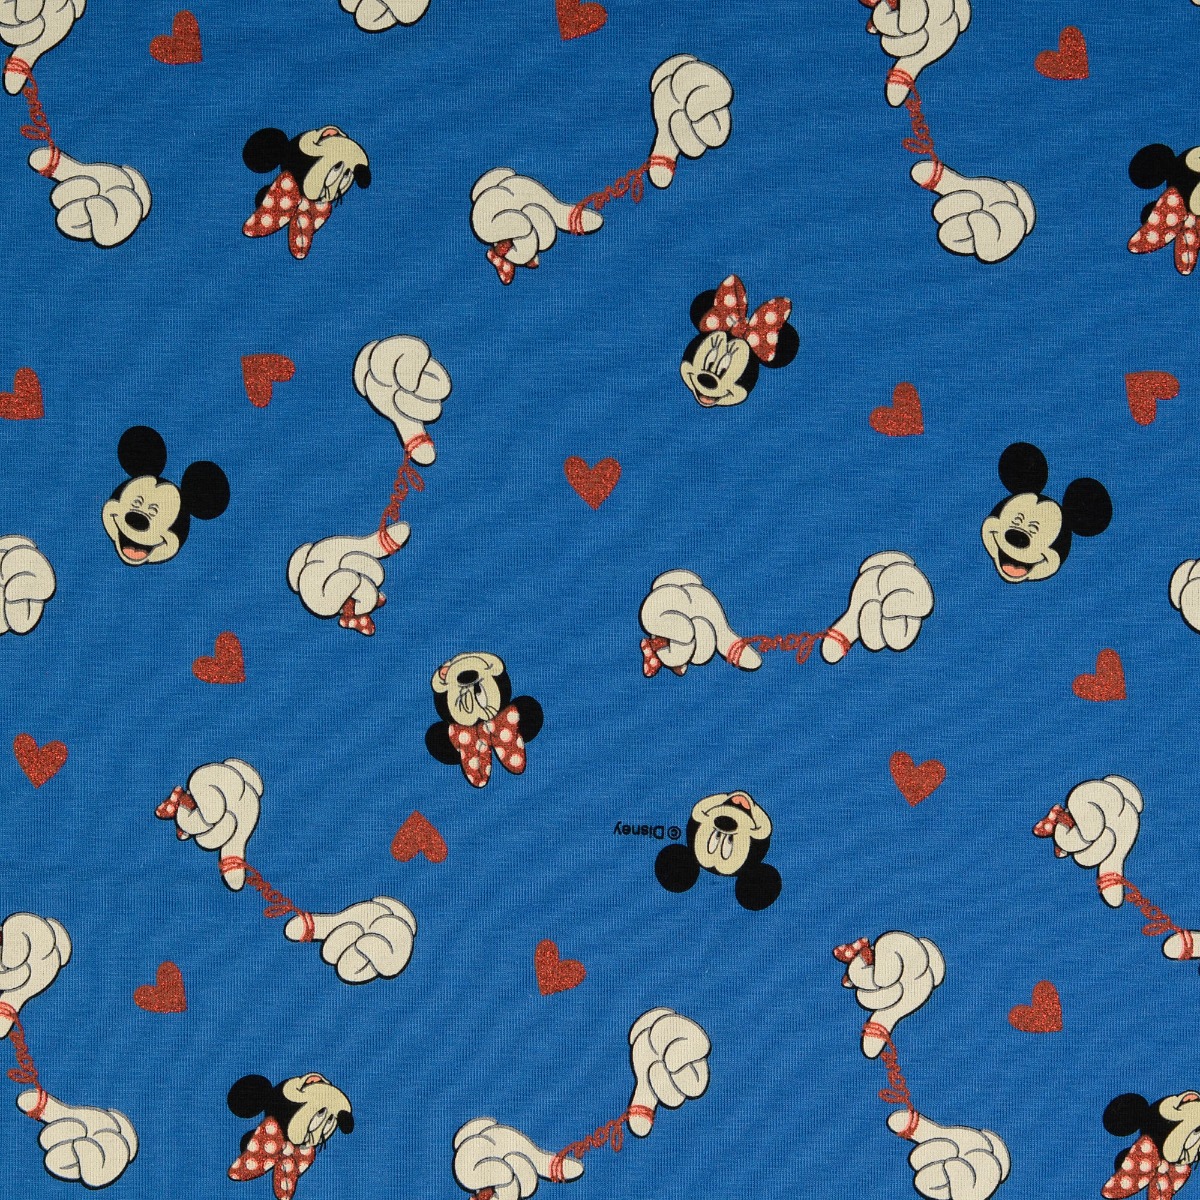 Jersey GLITZER Mickey & Minnie Mouse LOVE auf Blau Lizenz Digital